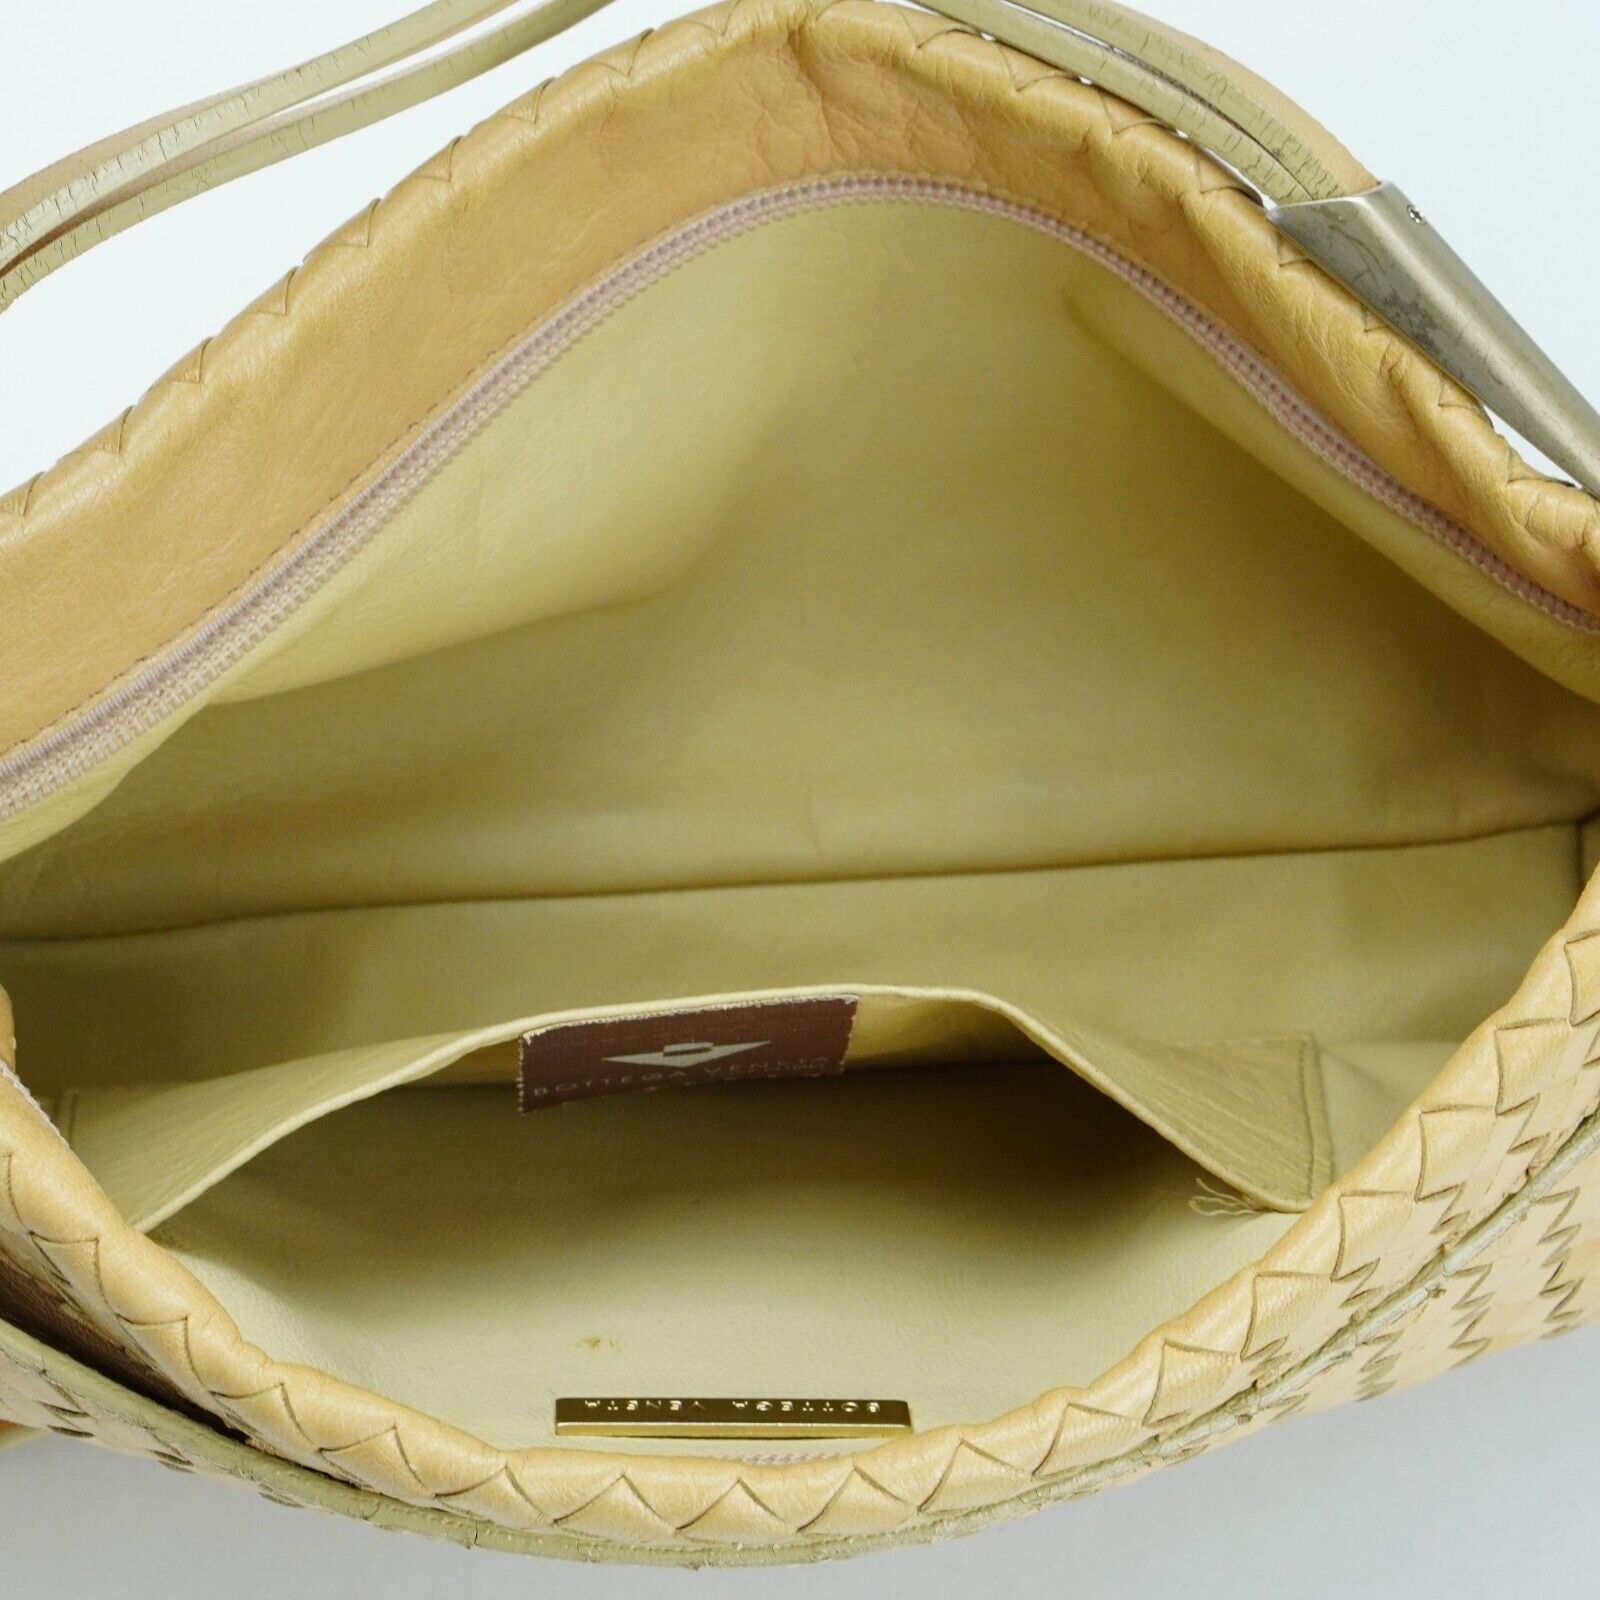 Bottega Veneta Intrecciato Leather Shoulder Bag Beige